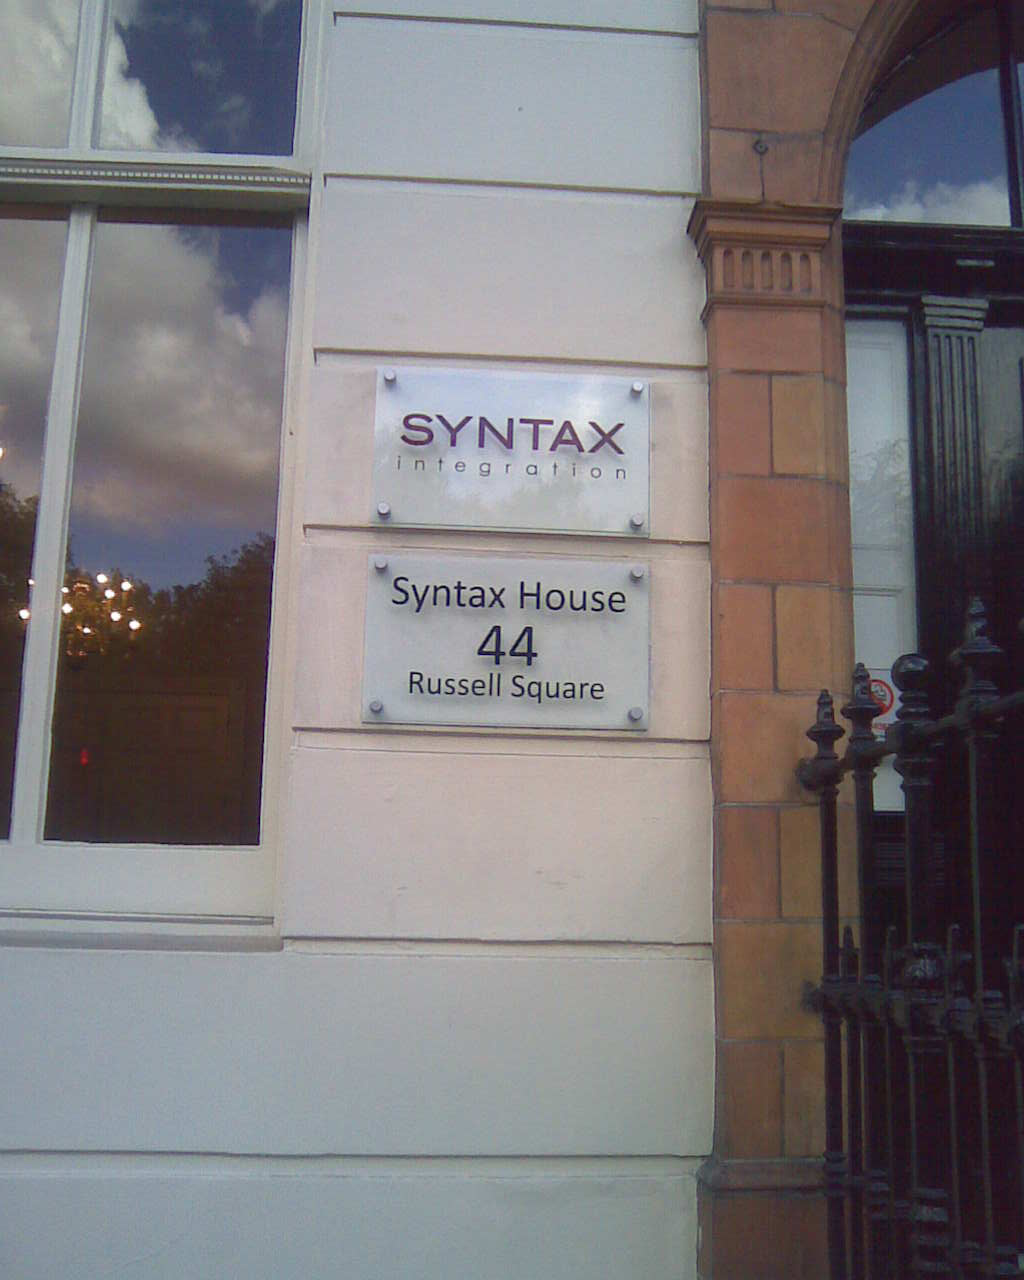 Syntax House